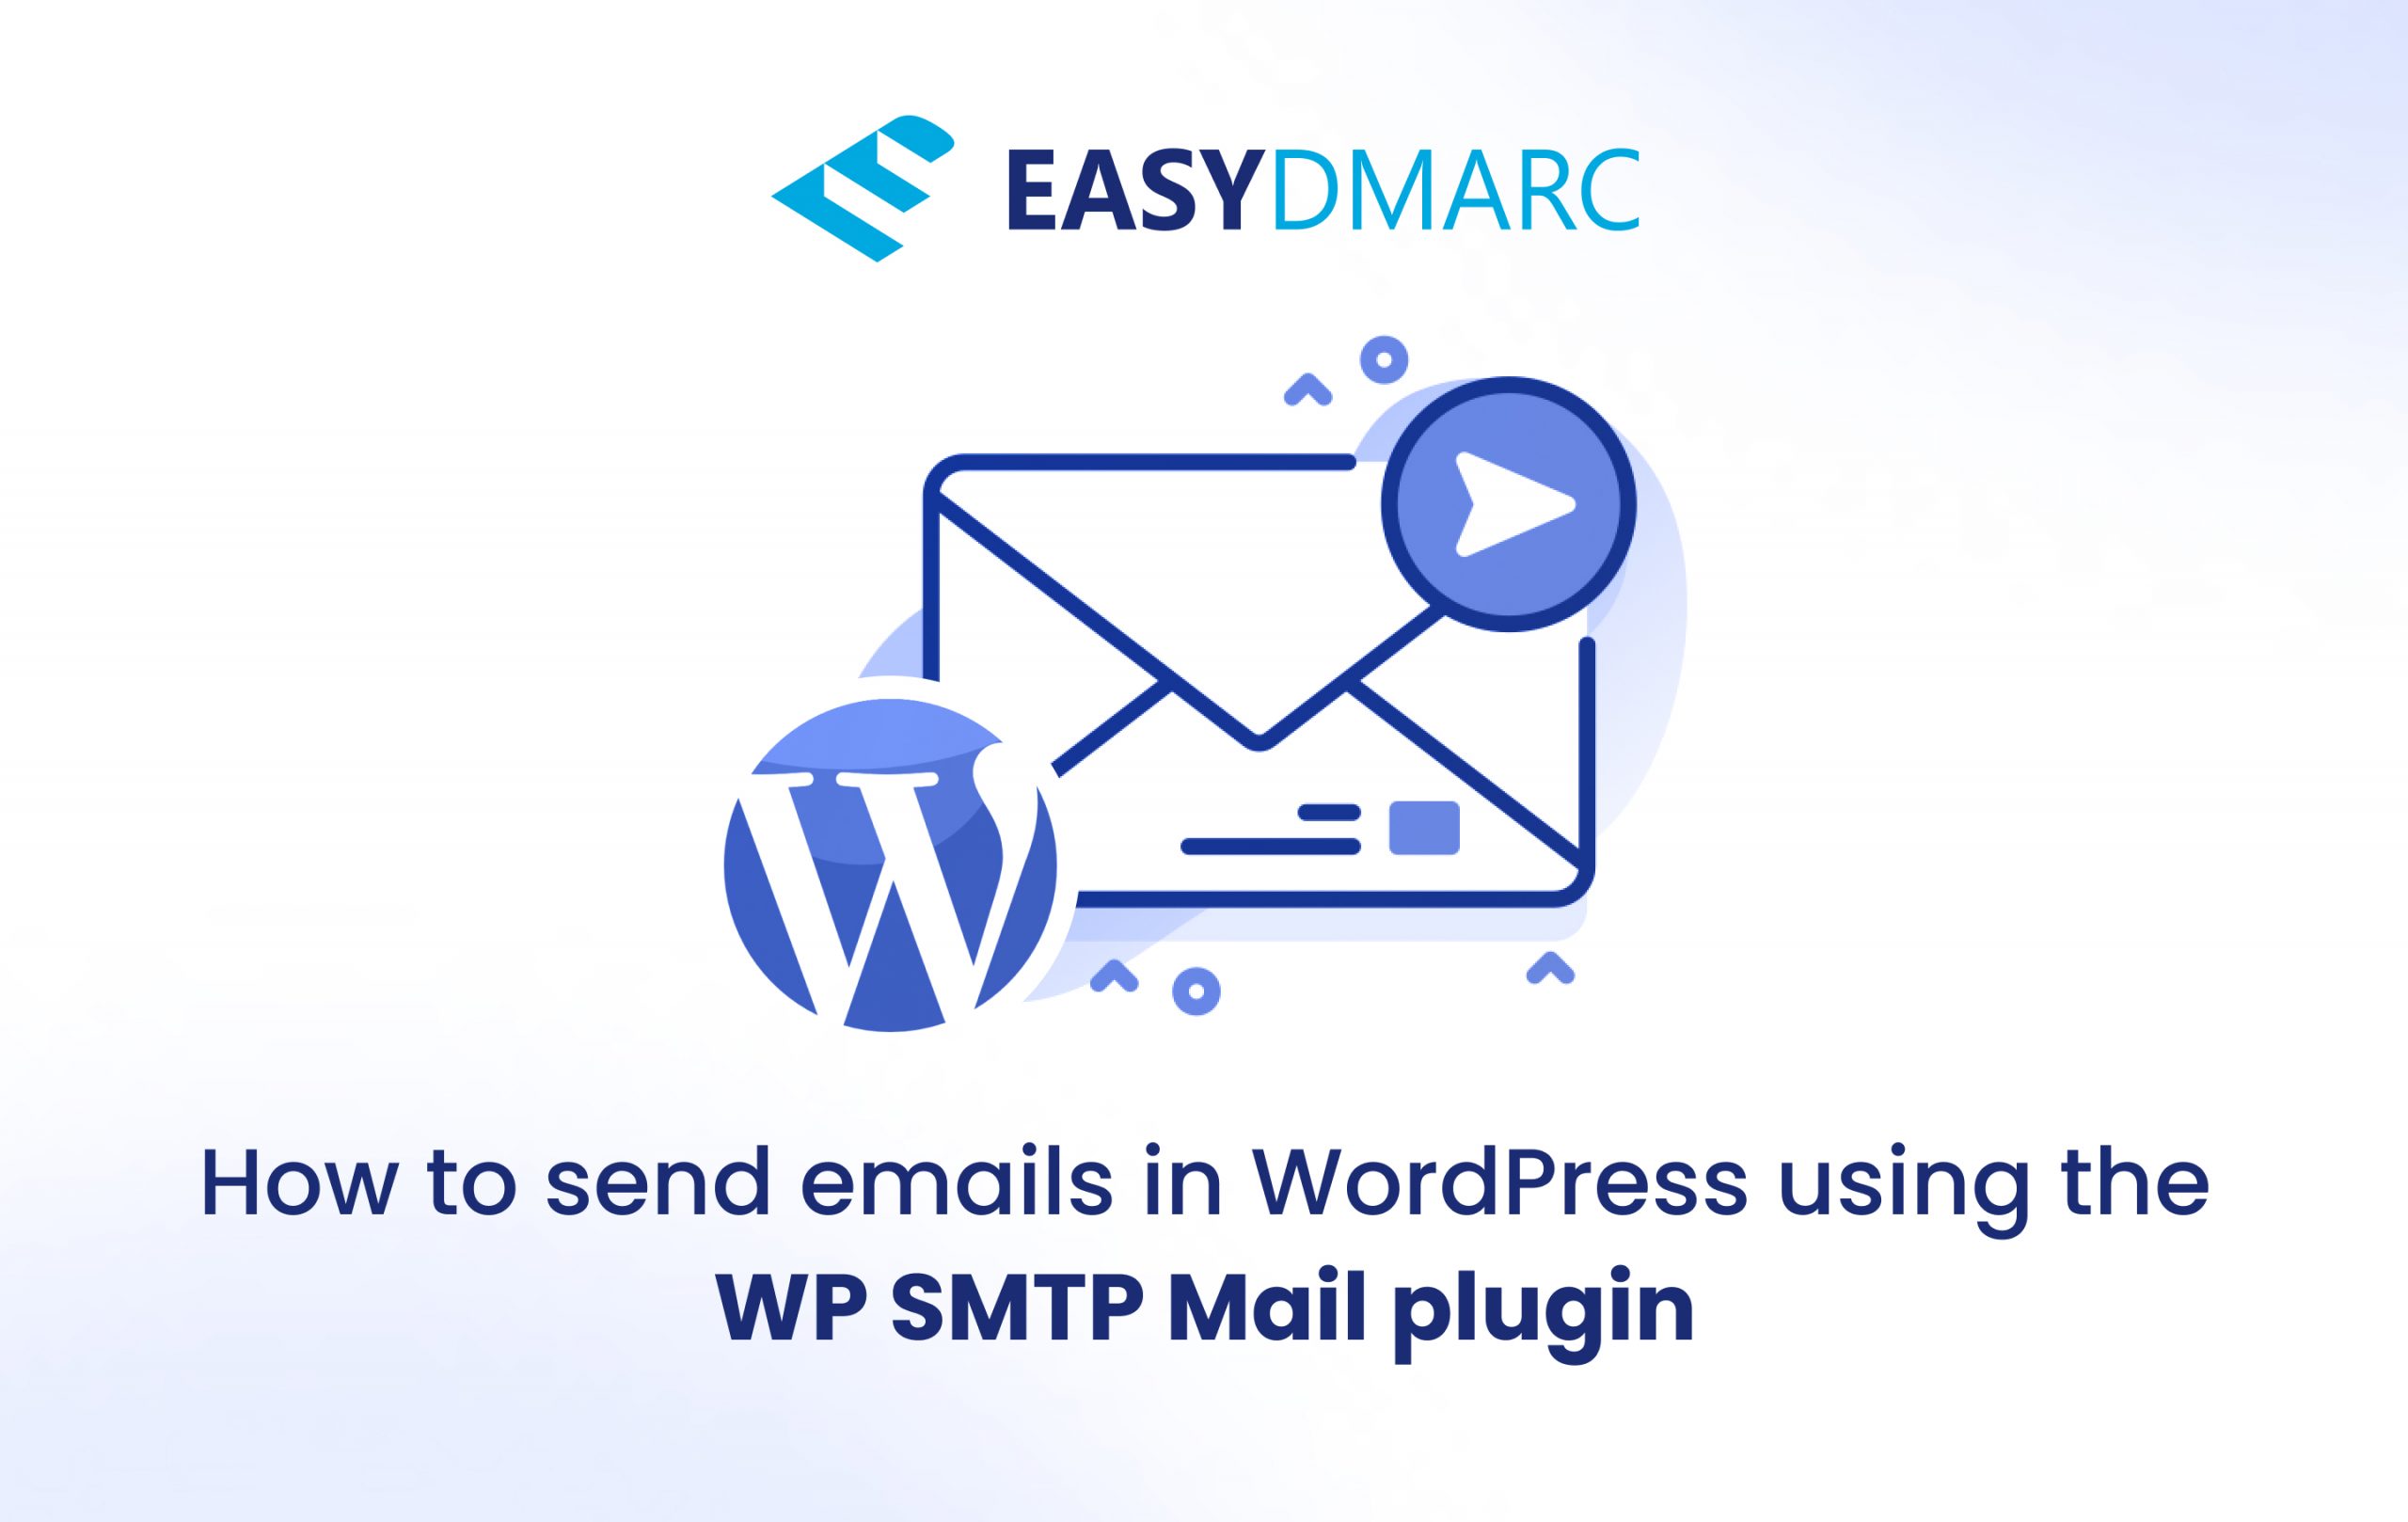 WordPress using the WP SMTP Mail plugin